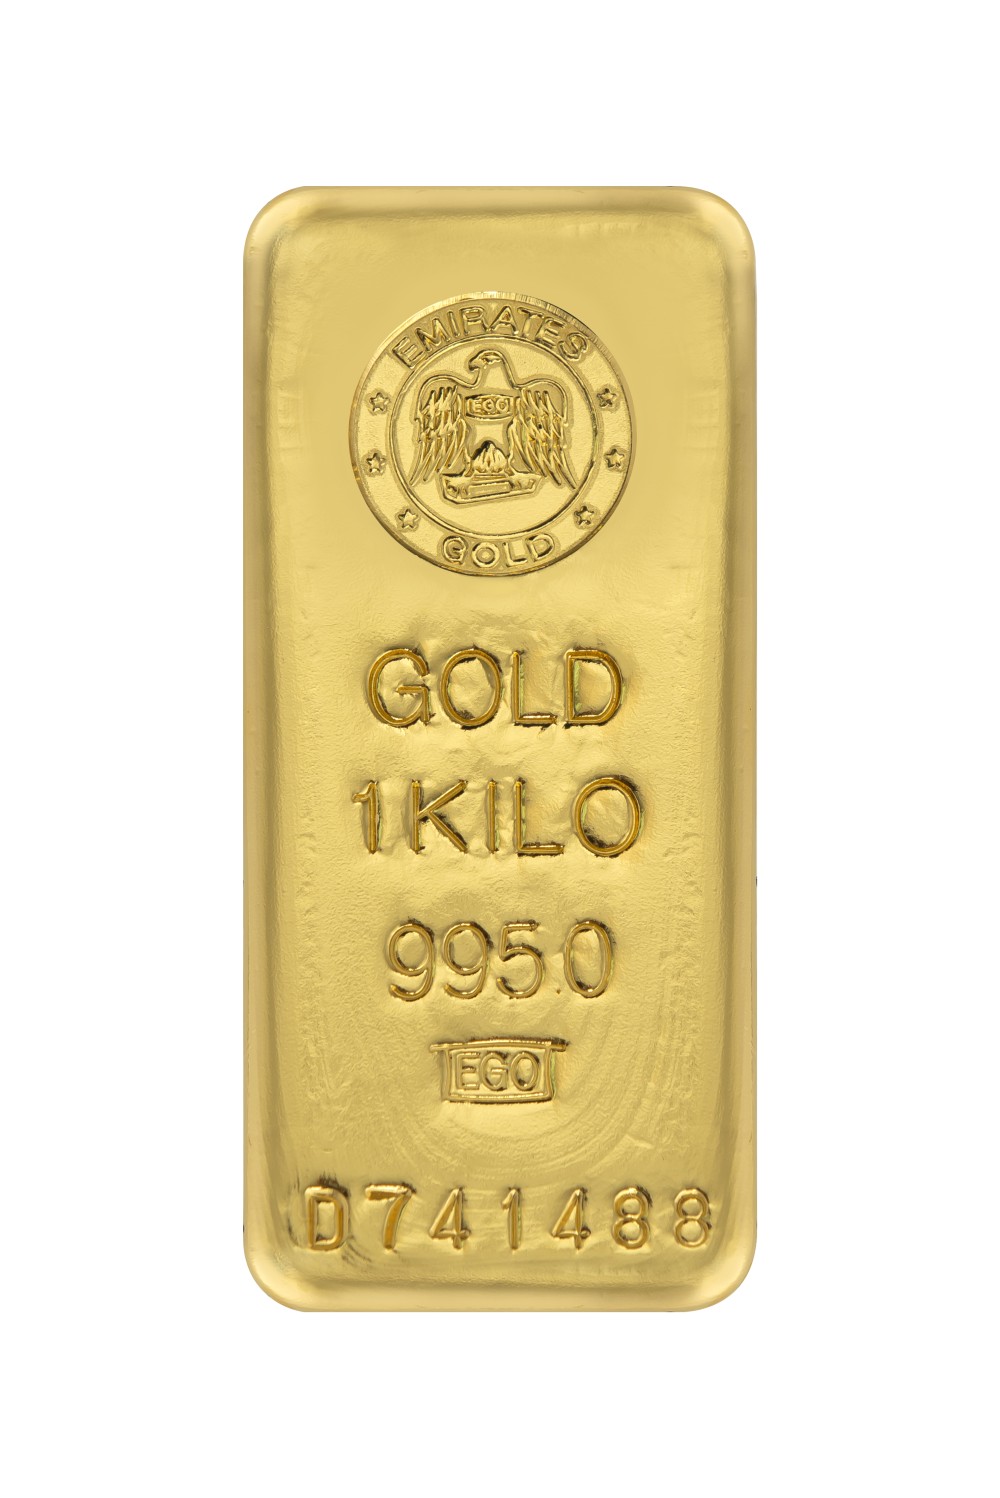 1 kg Fine Gold Bar .995 - Emirates Gold